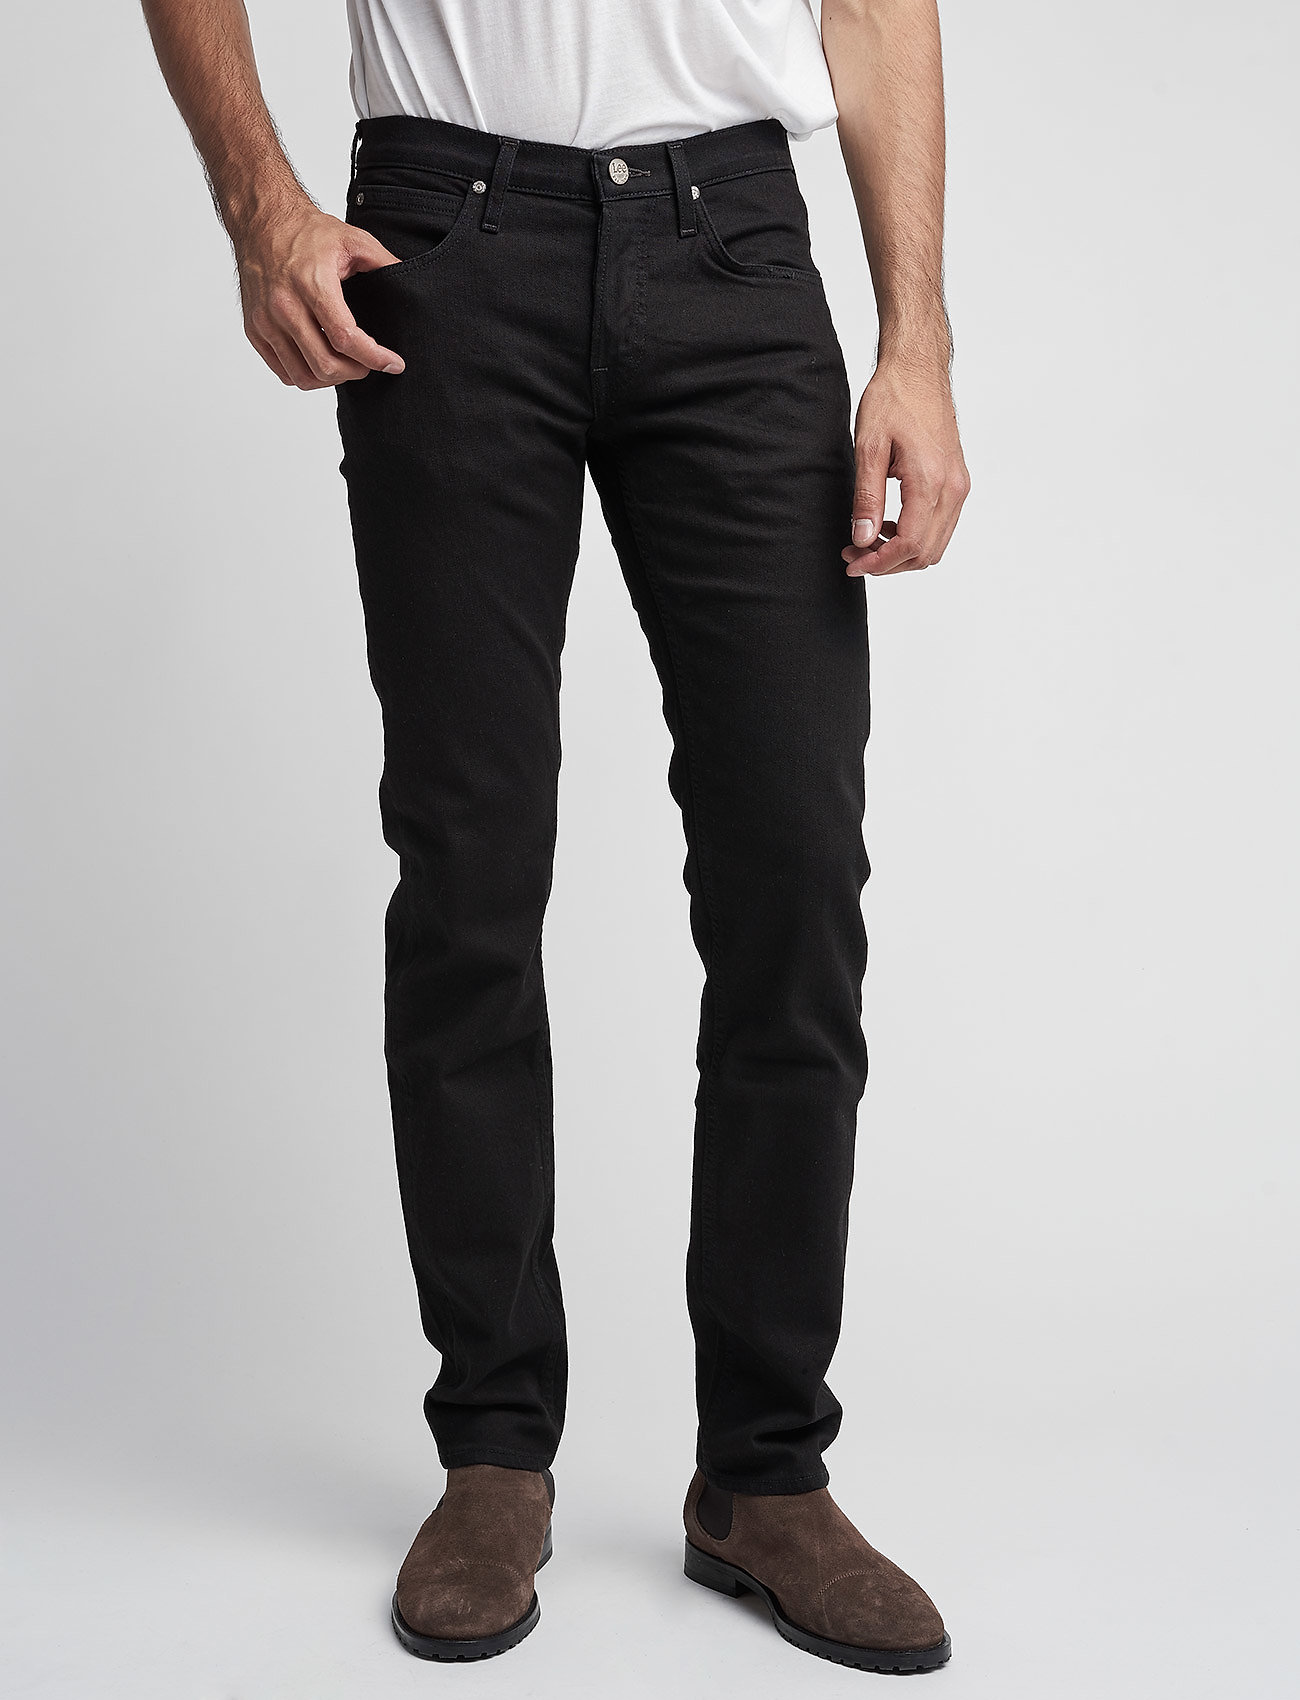 Lee Jeans Daren Clean Black - Regular jeans | Boozt.com